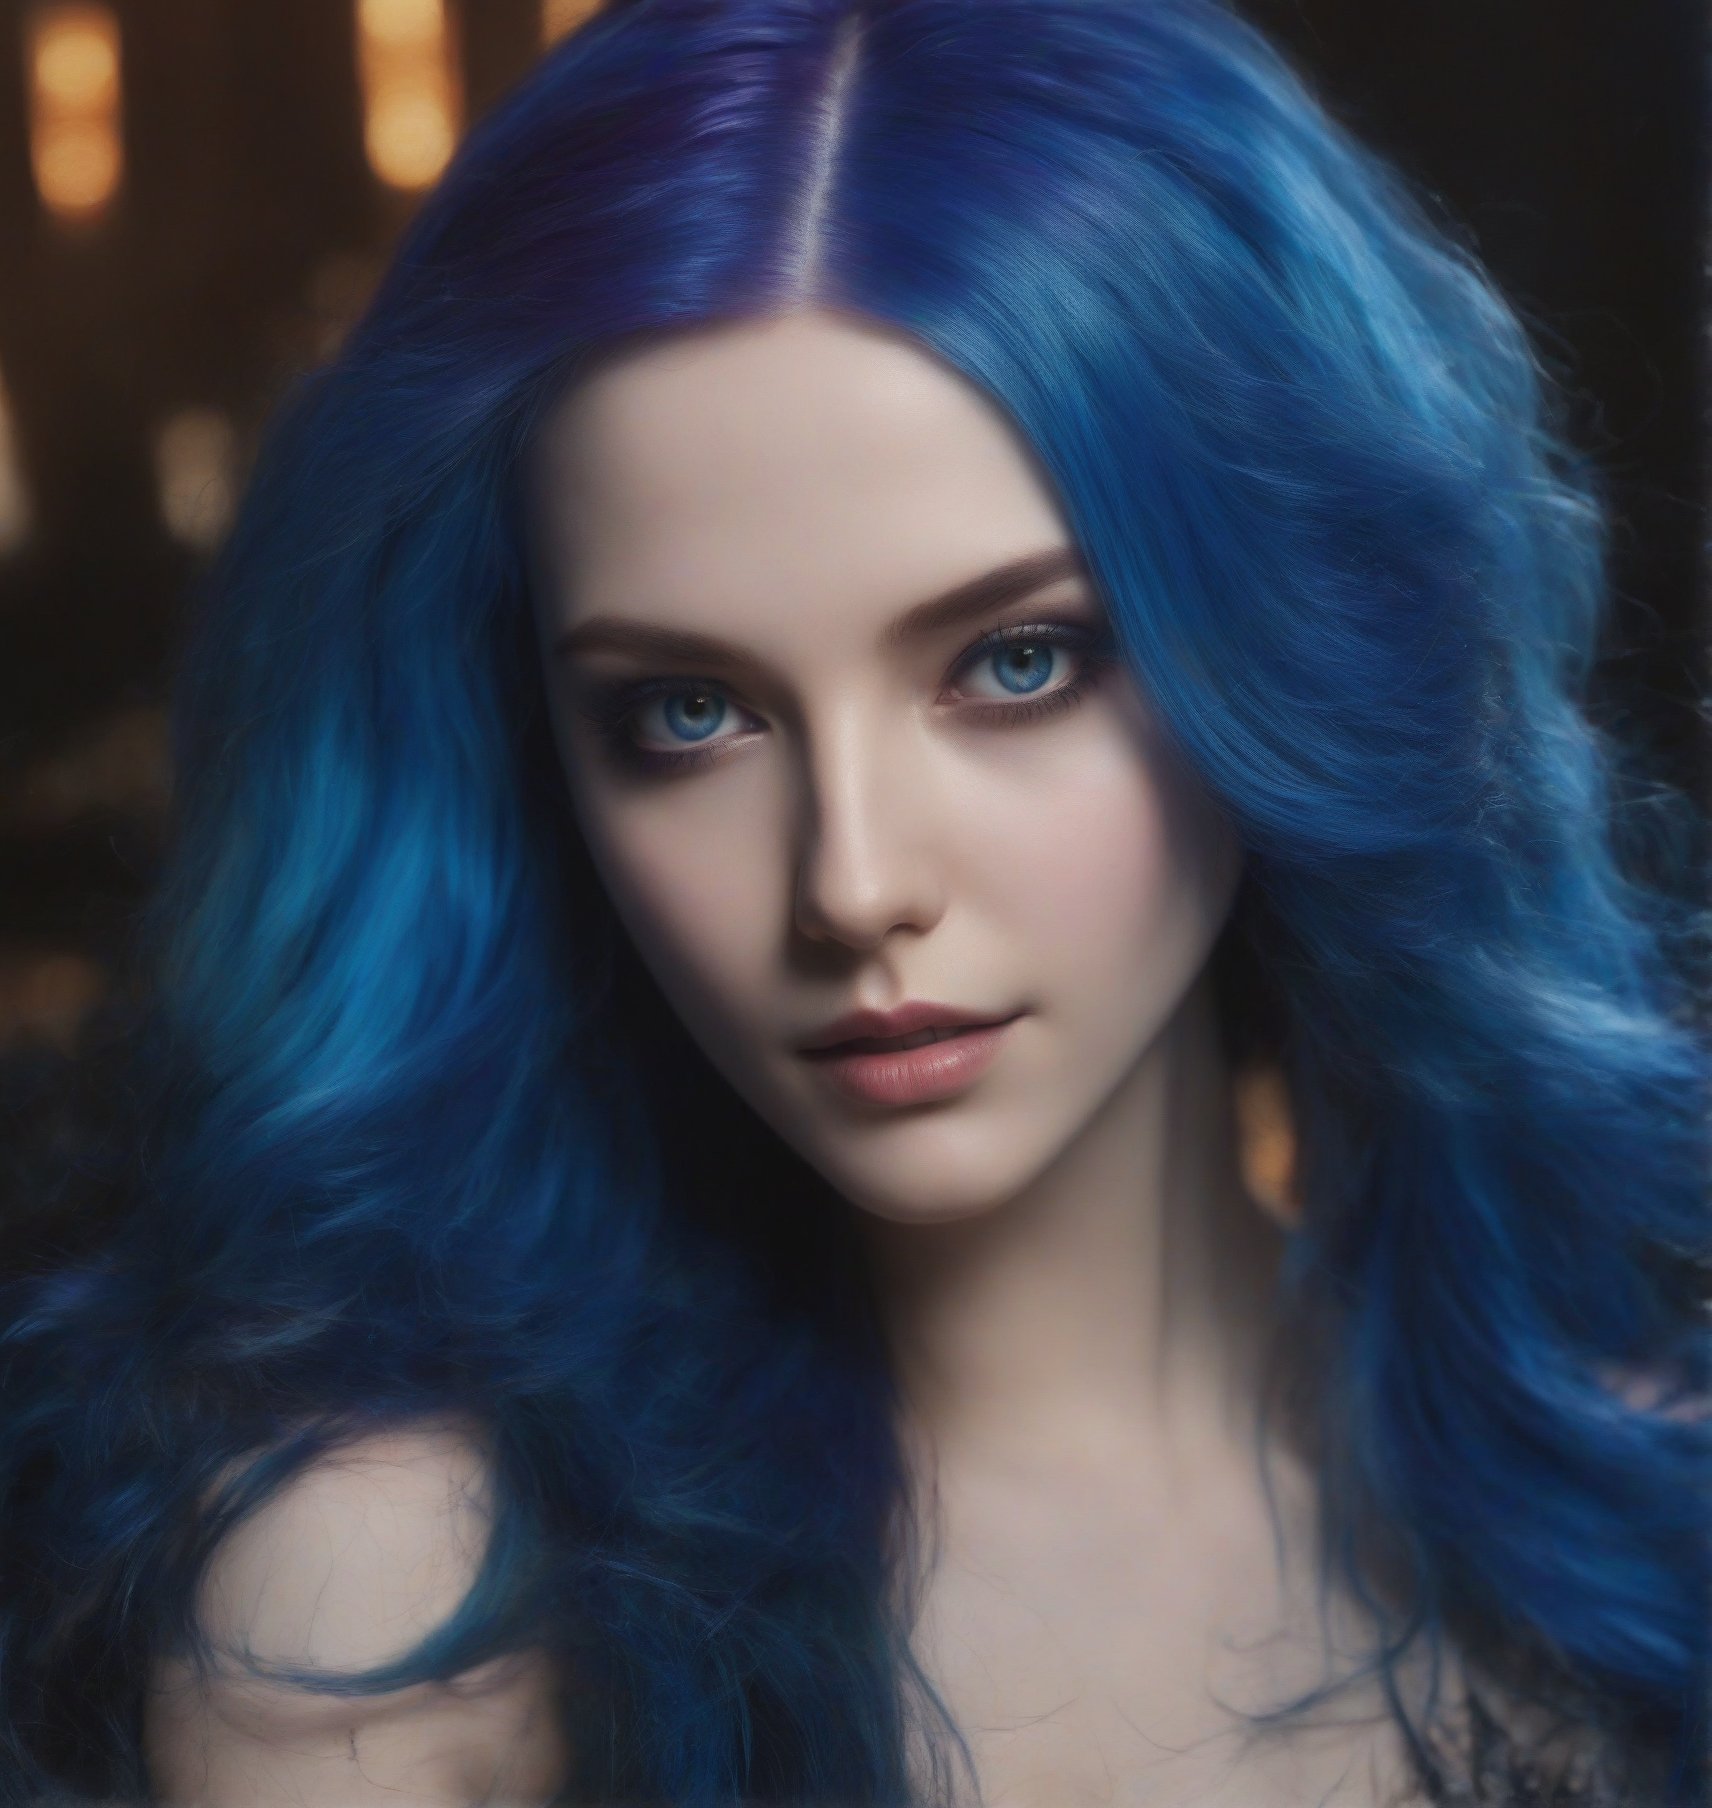 a banshi female, evil, dark, , long flowing bright blue hair, beautiful ,DonMP41n717Bl4ckXL